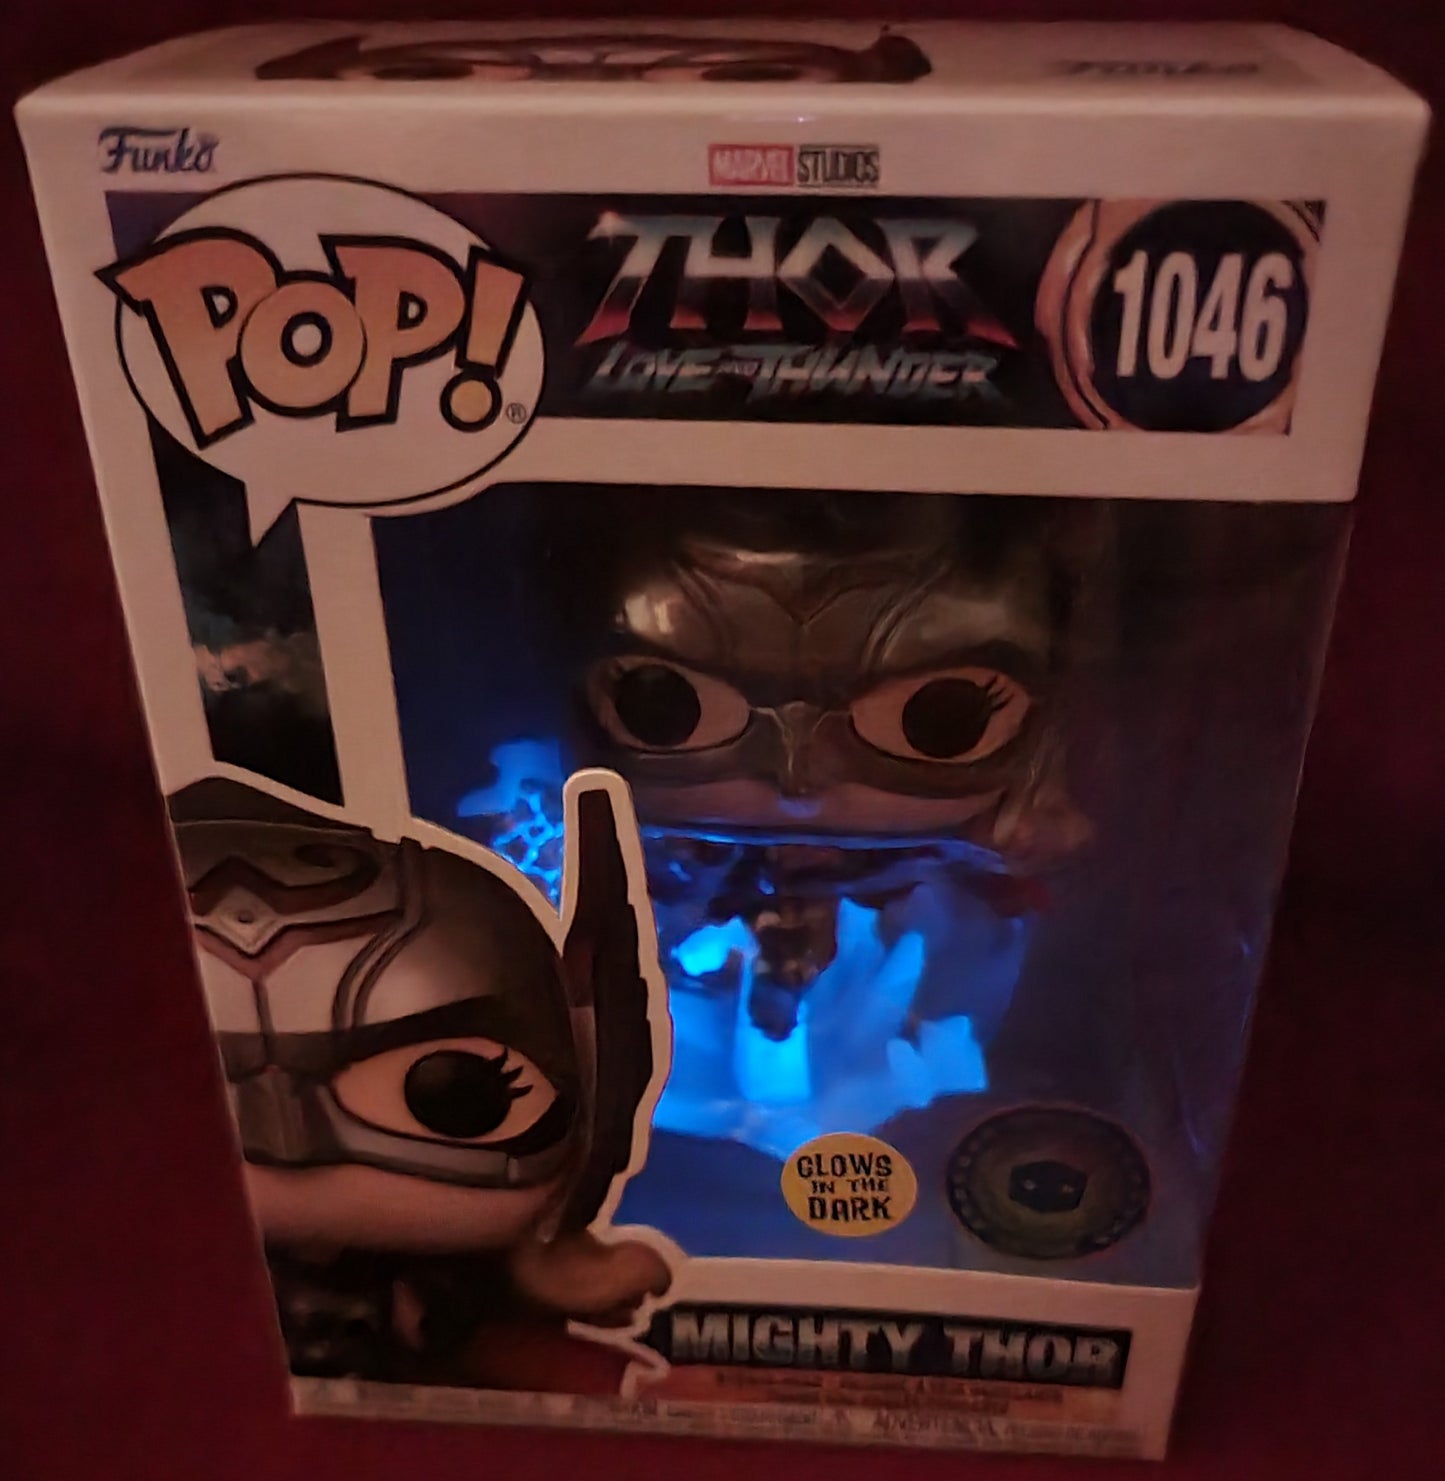 Mighty Thor pop in a box Exclusive funko # 1046 (nib)